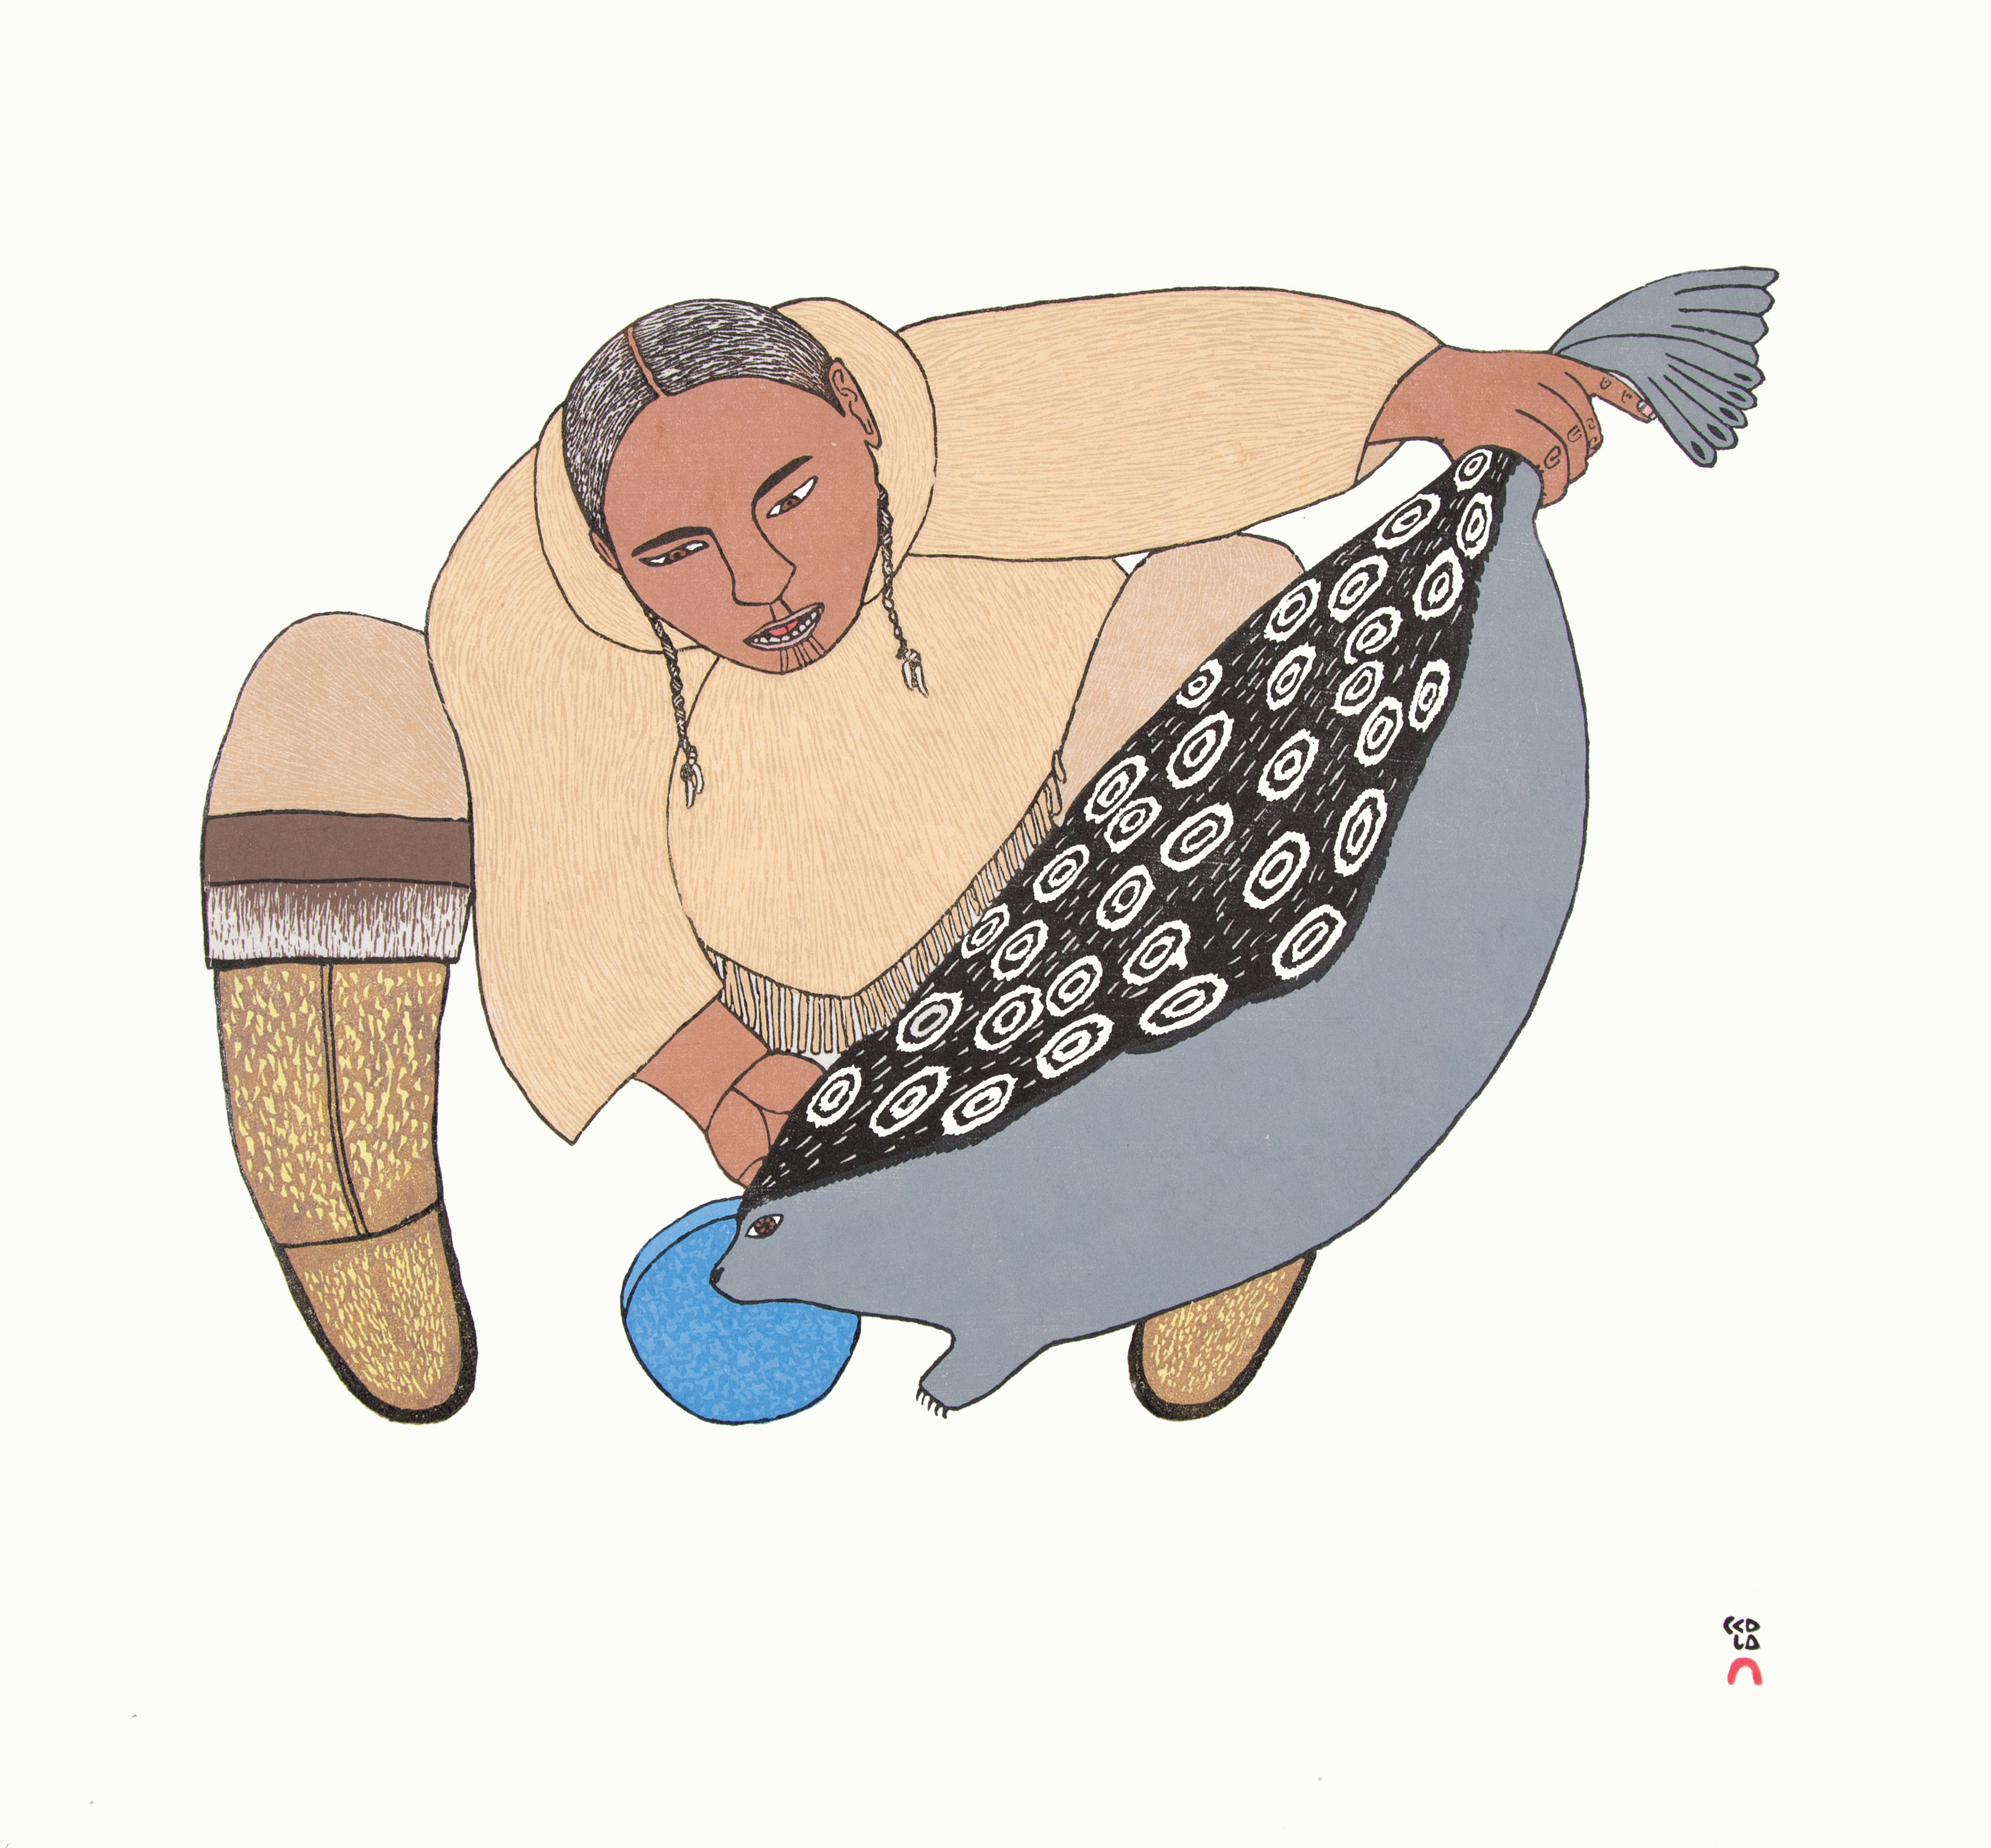 NINGIUKULU TEEVEE Surusiq Natsiaruqtuq (The Boy Turns into a Seal) Stonecut Printer: Tapaungai Niviaqsi 52 x 55.5 cm; 20 3/4 x 22 in. $560